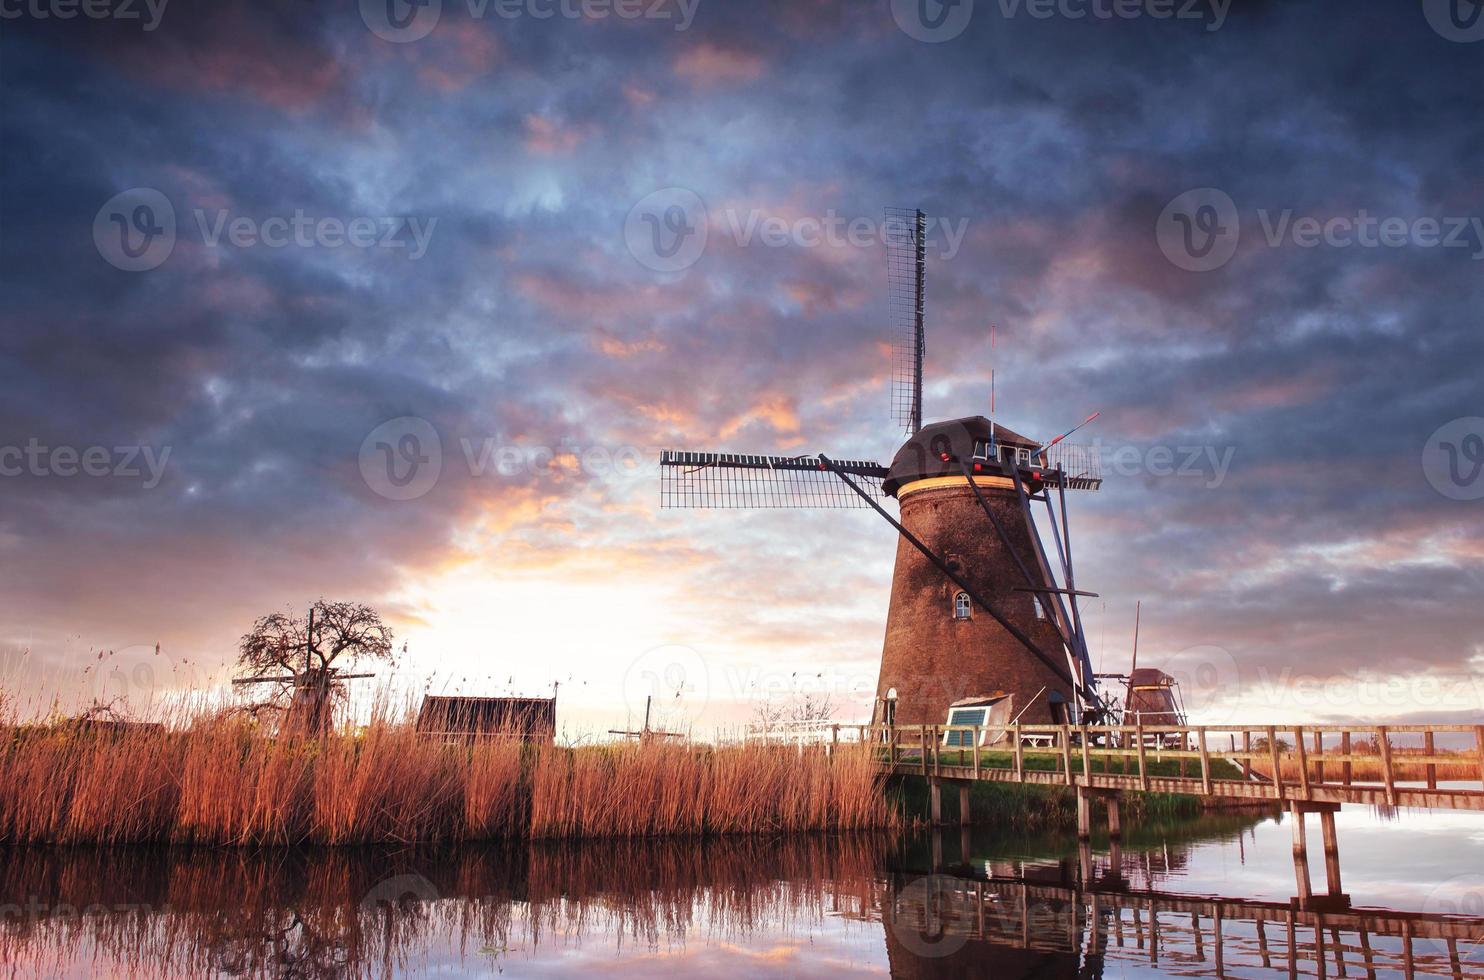 a estrada que leva aos moinhos de vento holandeses do canal foto